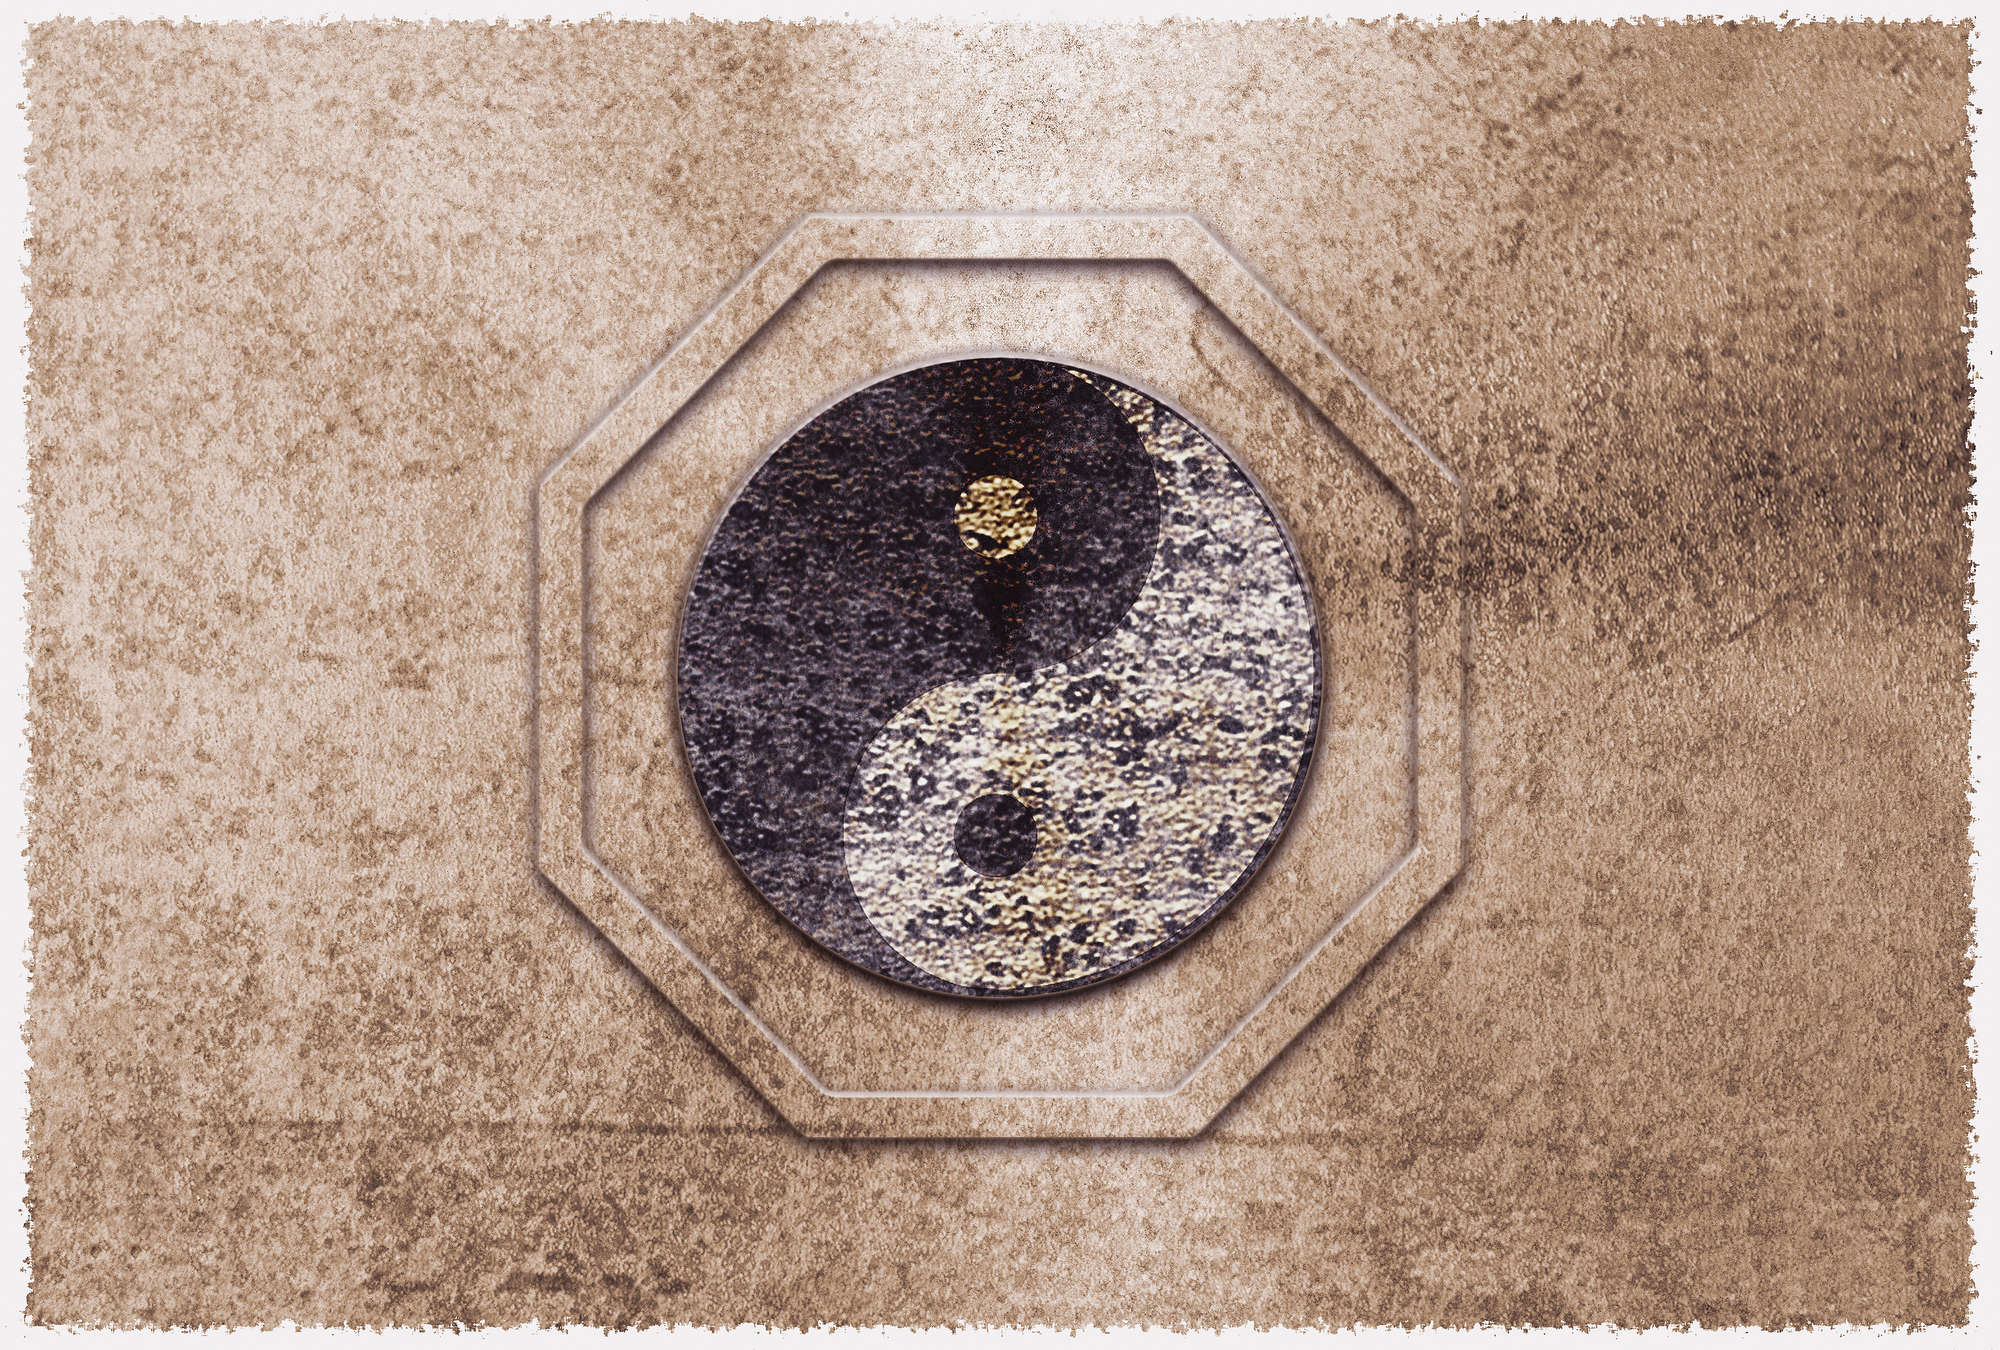             Photo wallpaper Yin&Yang, Asian harmony symbol - Brown, Black, White
        